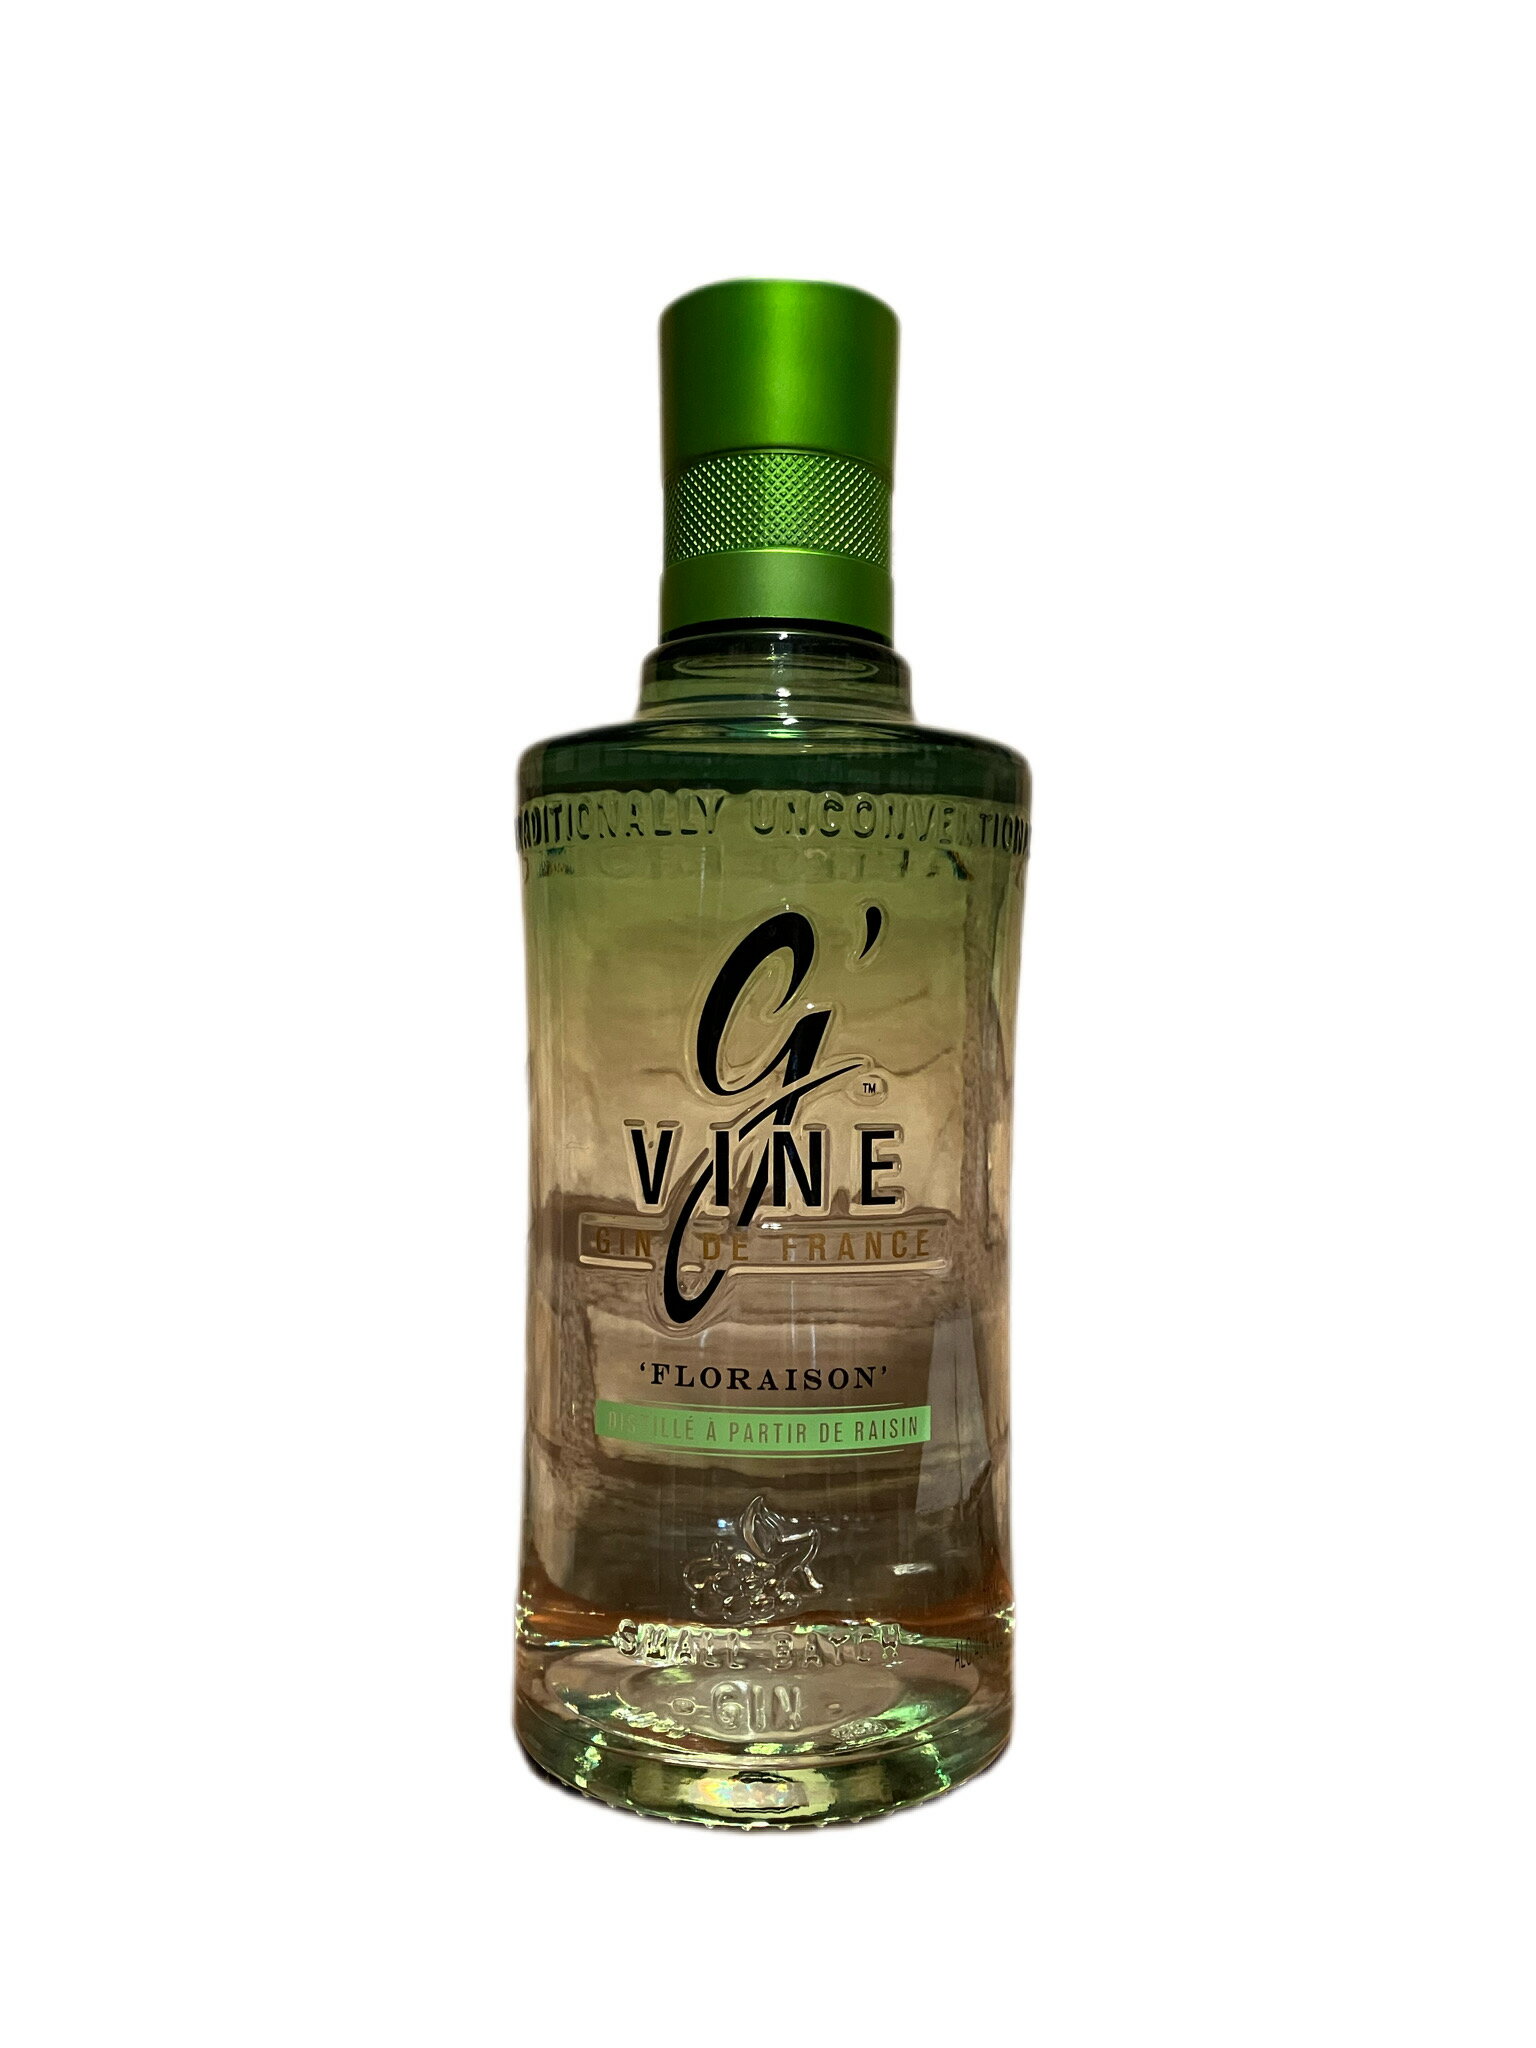 G VINE ジーヴァイン フロレゾン 700ml 40% グリーン ジン スピリッツ G VINE FLORAISON GREEN GIN SPIRITS COGNAC コニャック地方